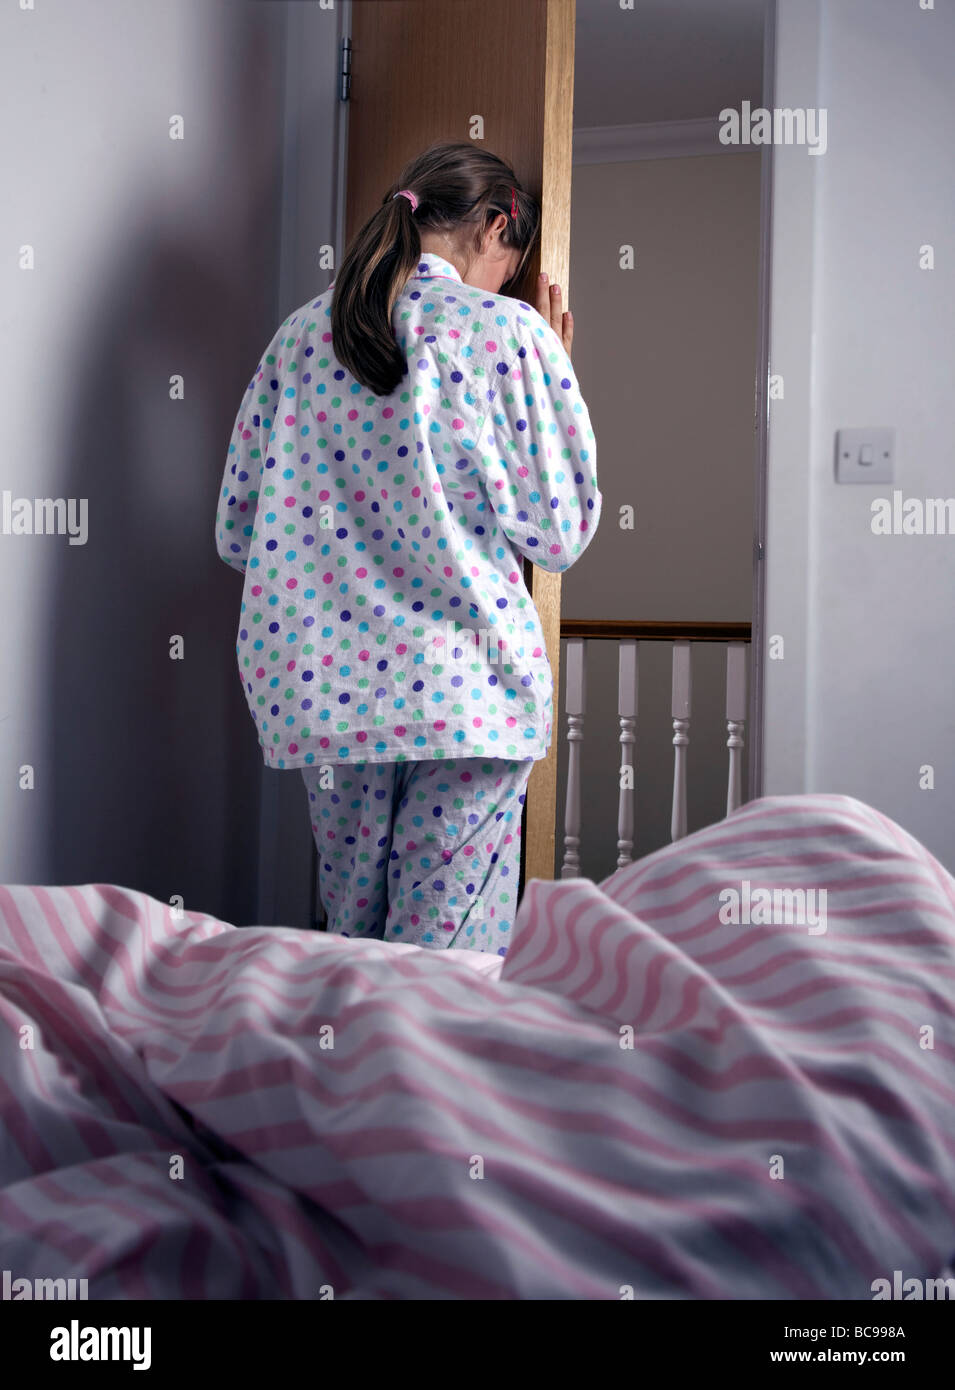 A young pony tailed girl wearing pyjamas, buries her head behind the bedroom door. Stock Photo